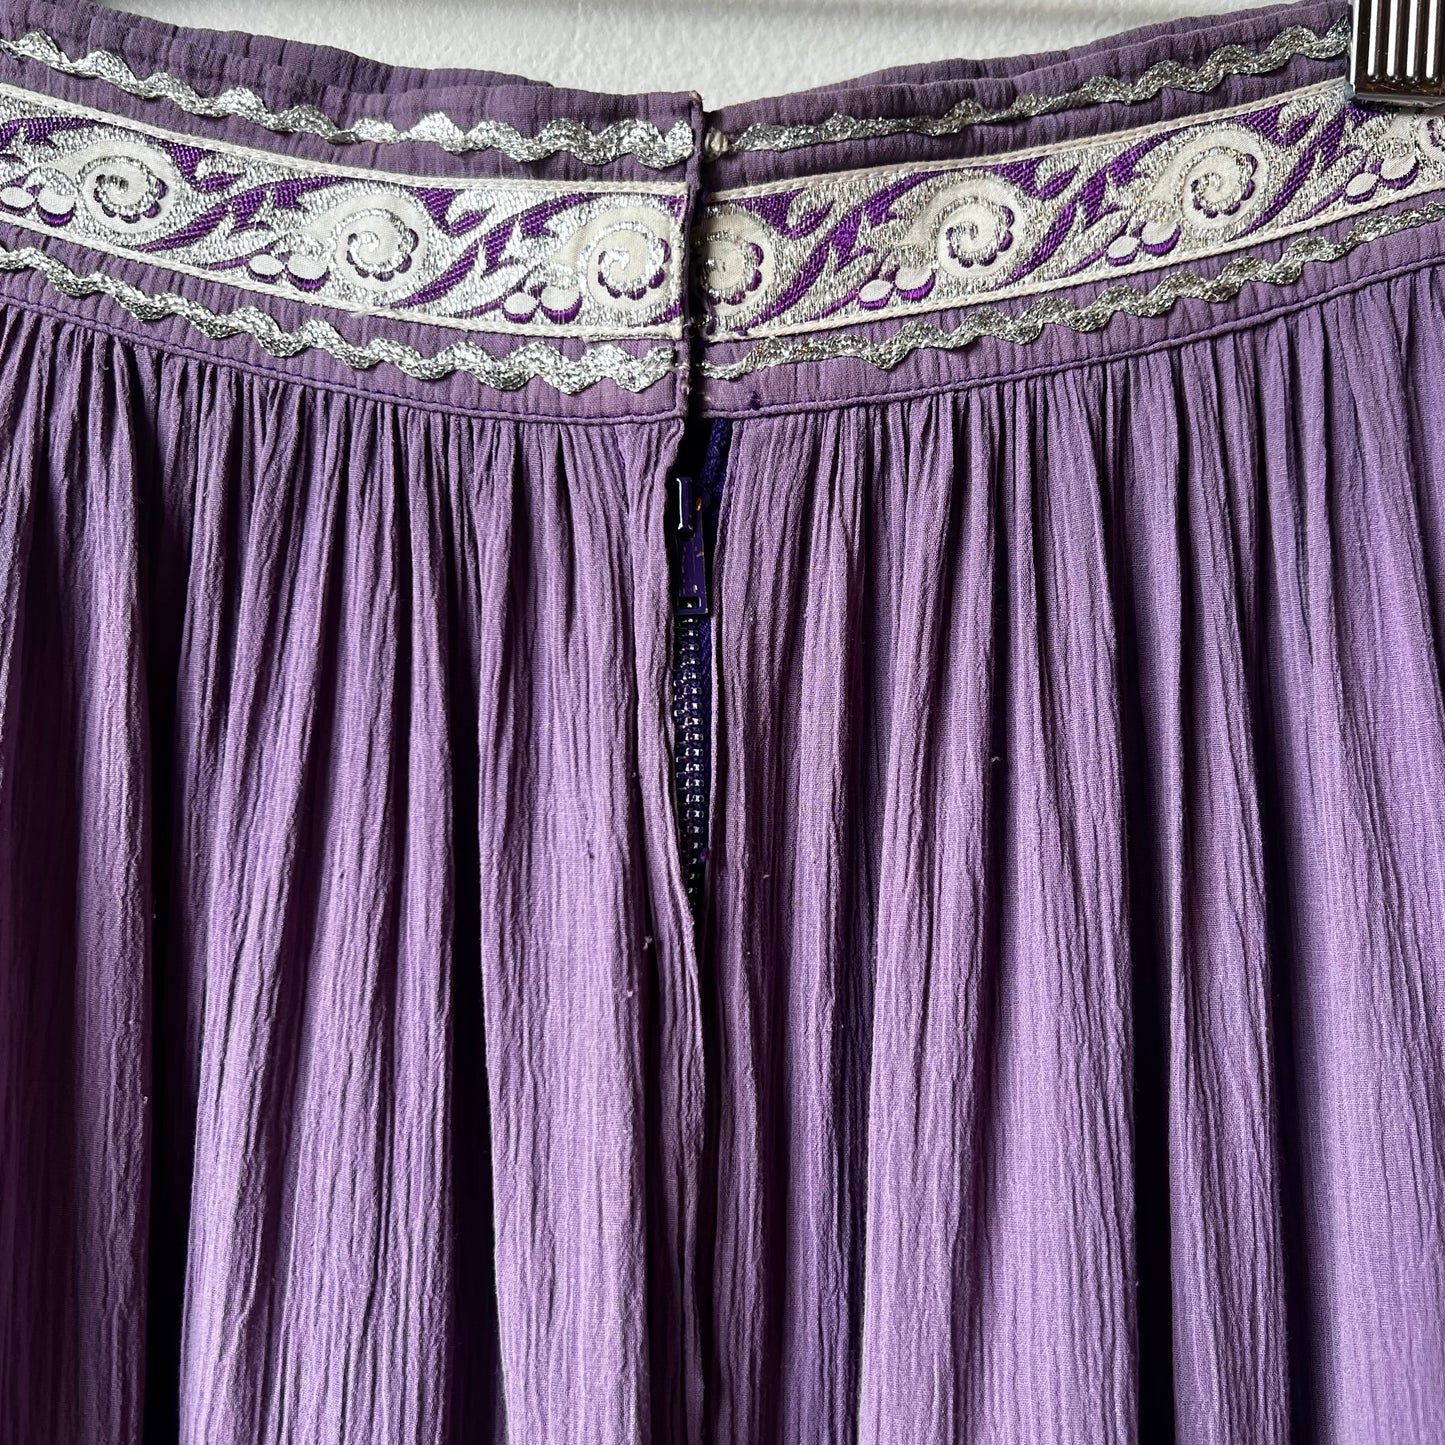 50's Purple Mid Length Square Dancing Skirt w Silver Rickrack Ribbon